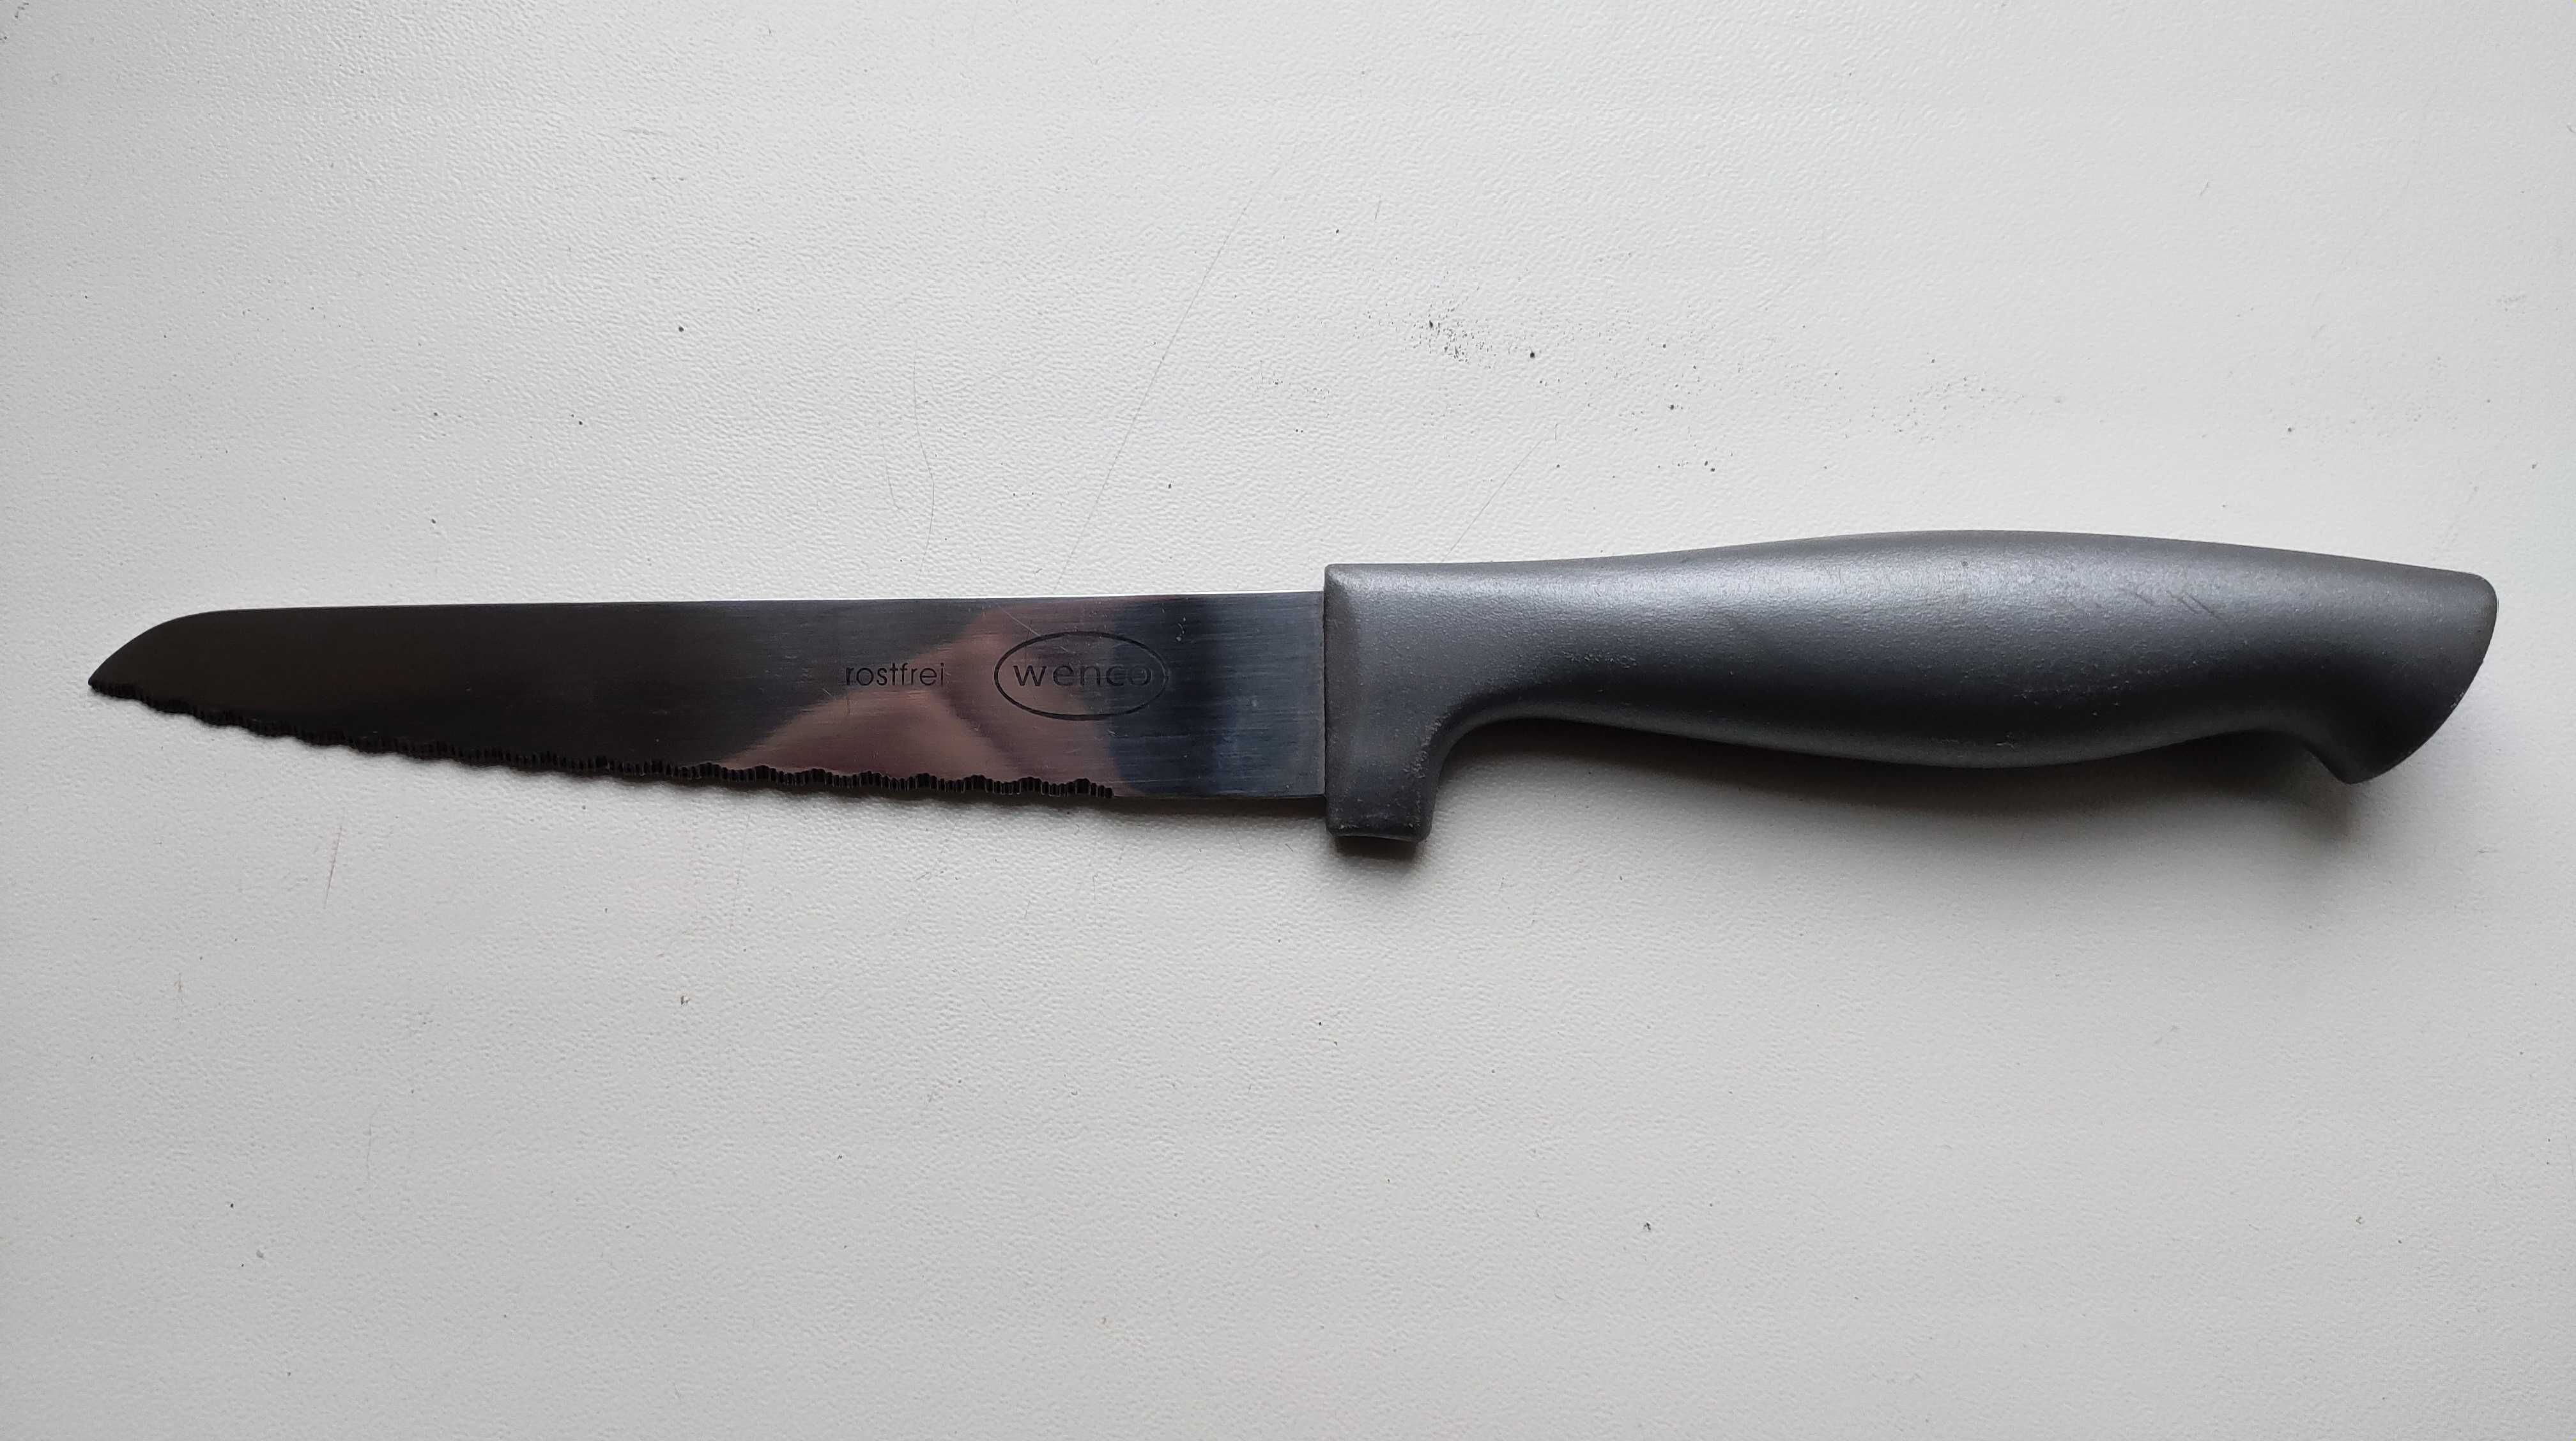 Нож кухонный Wenco rostfrei